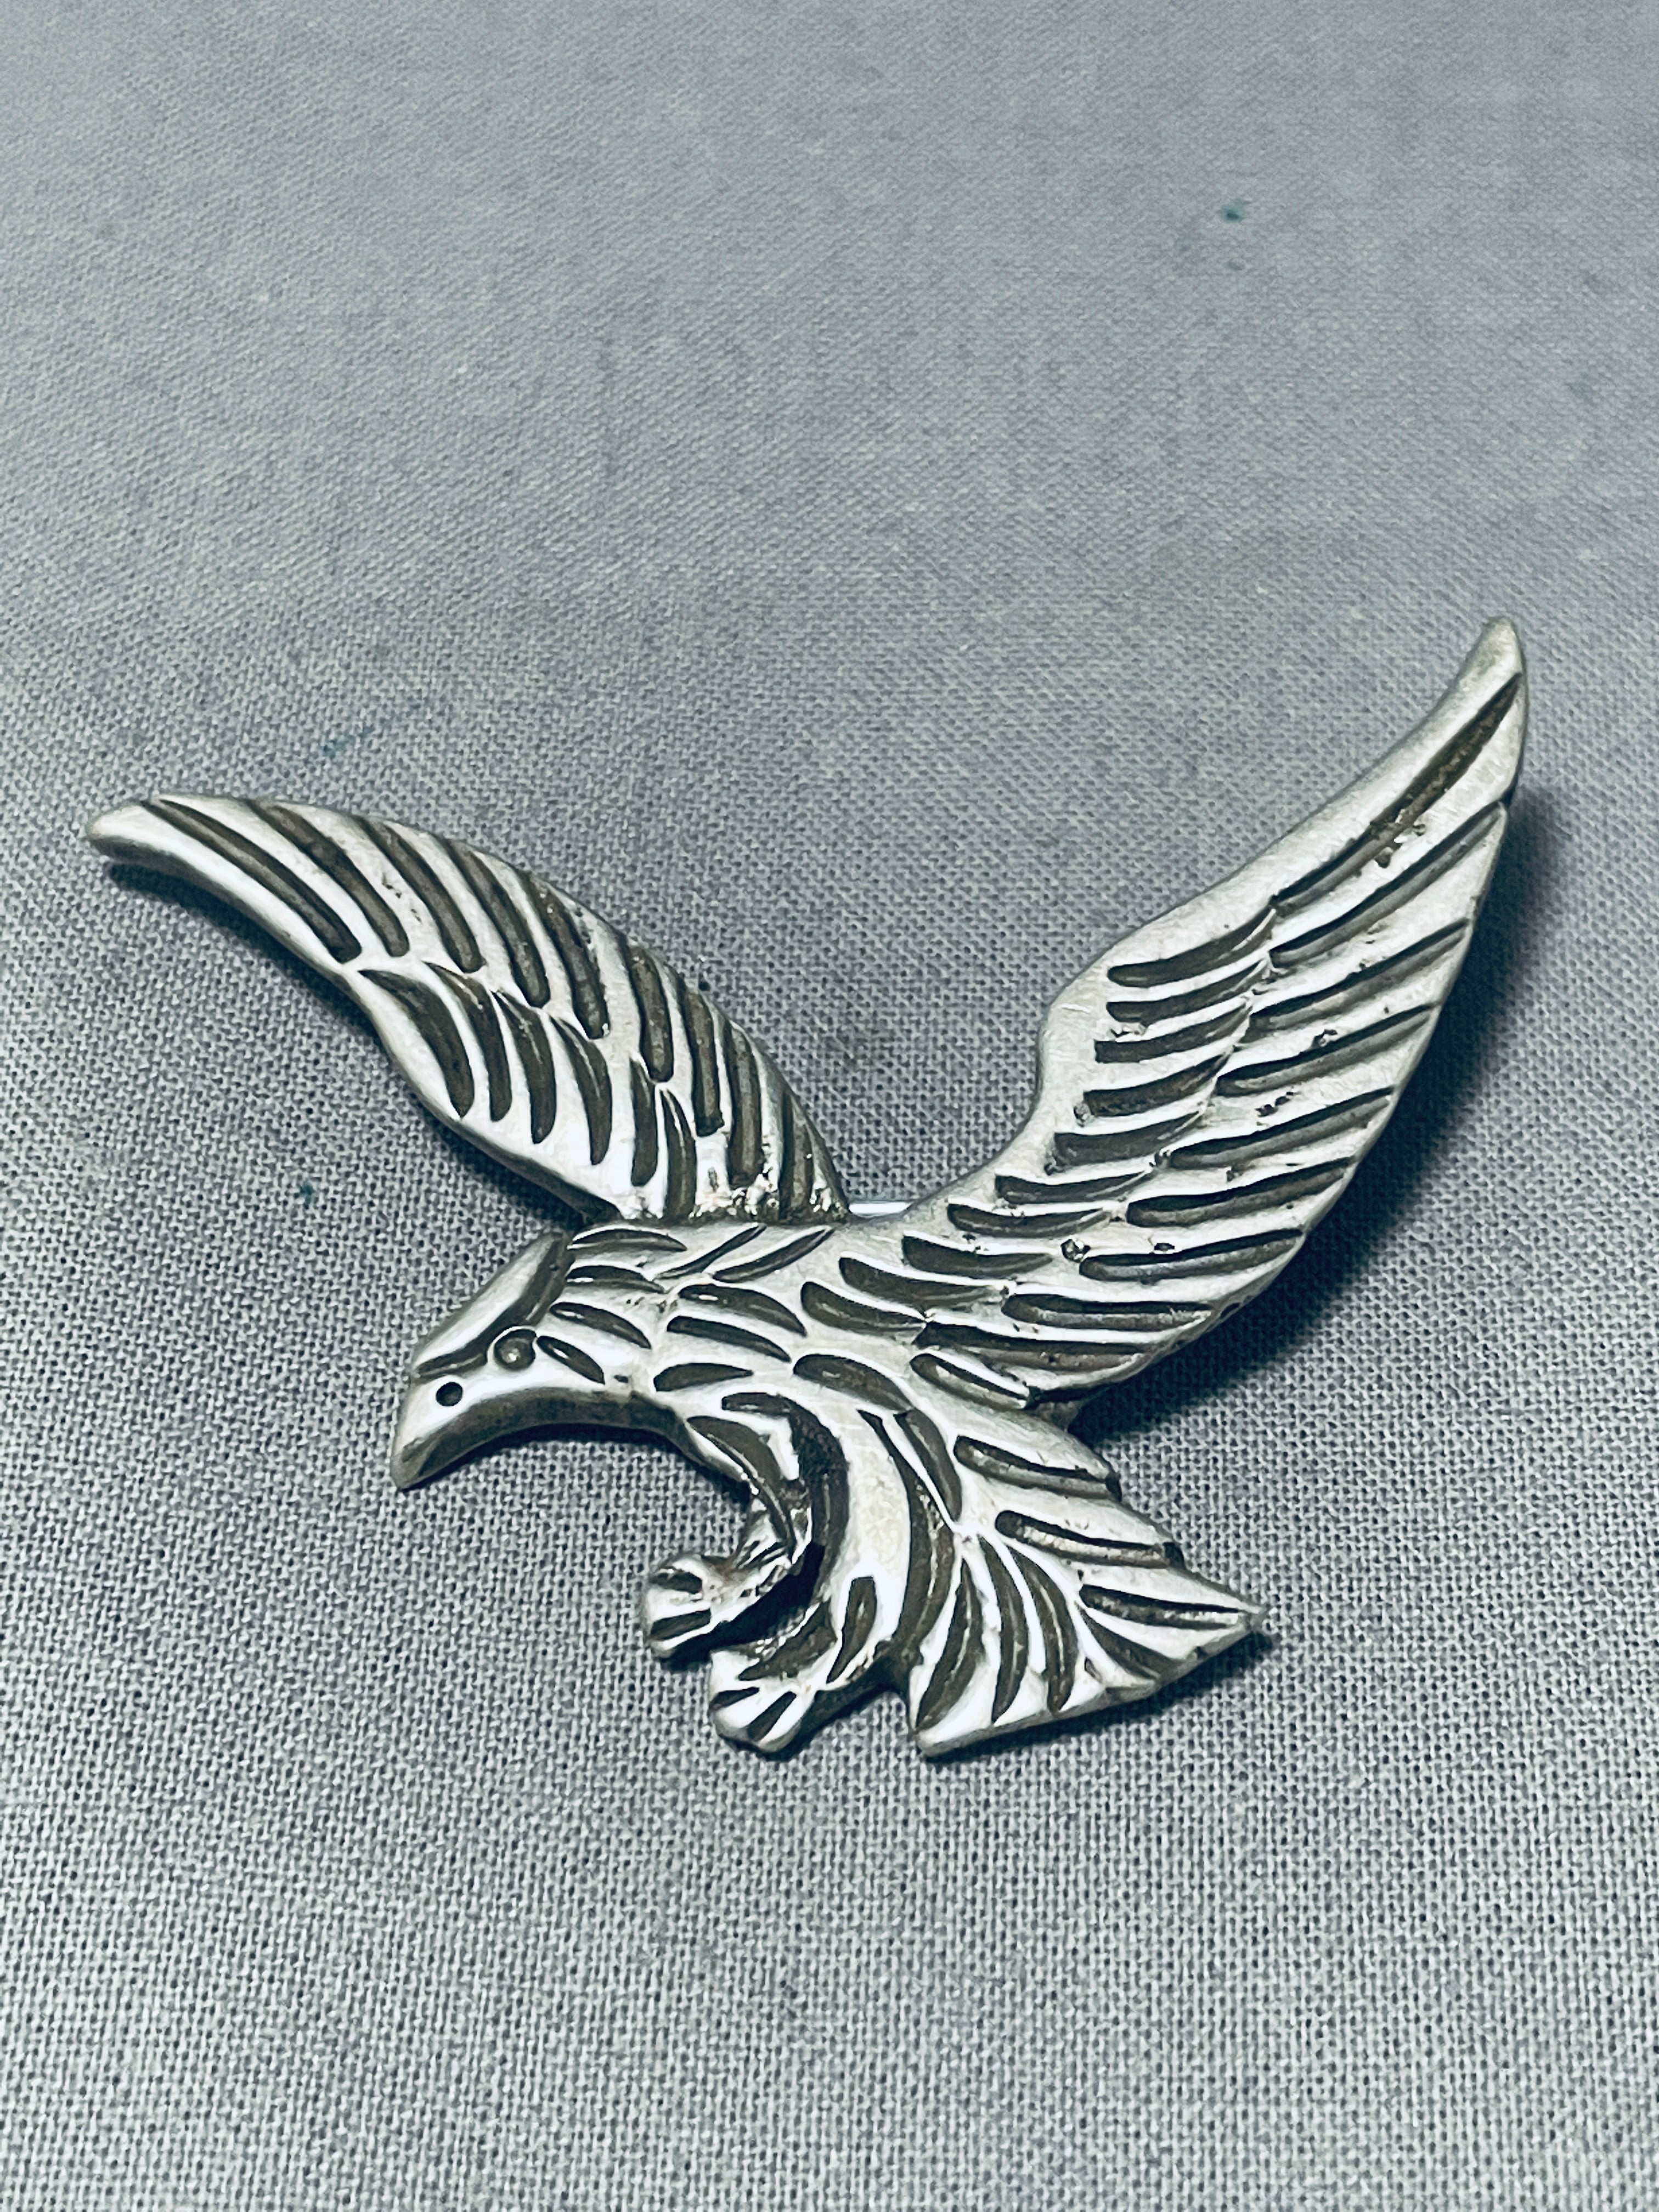 Sterling Silver Polish Eagle Zable Bead - PG75195